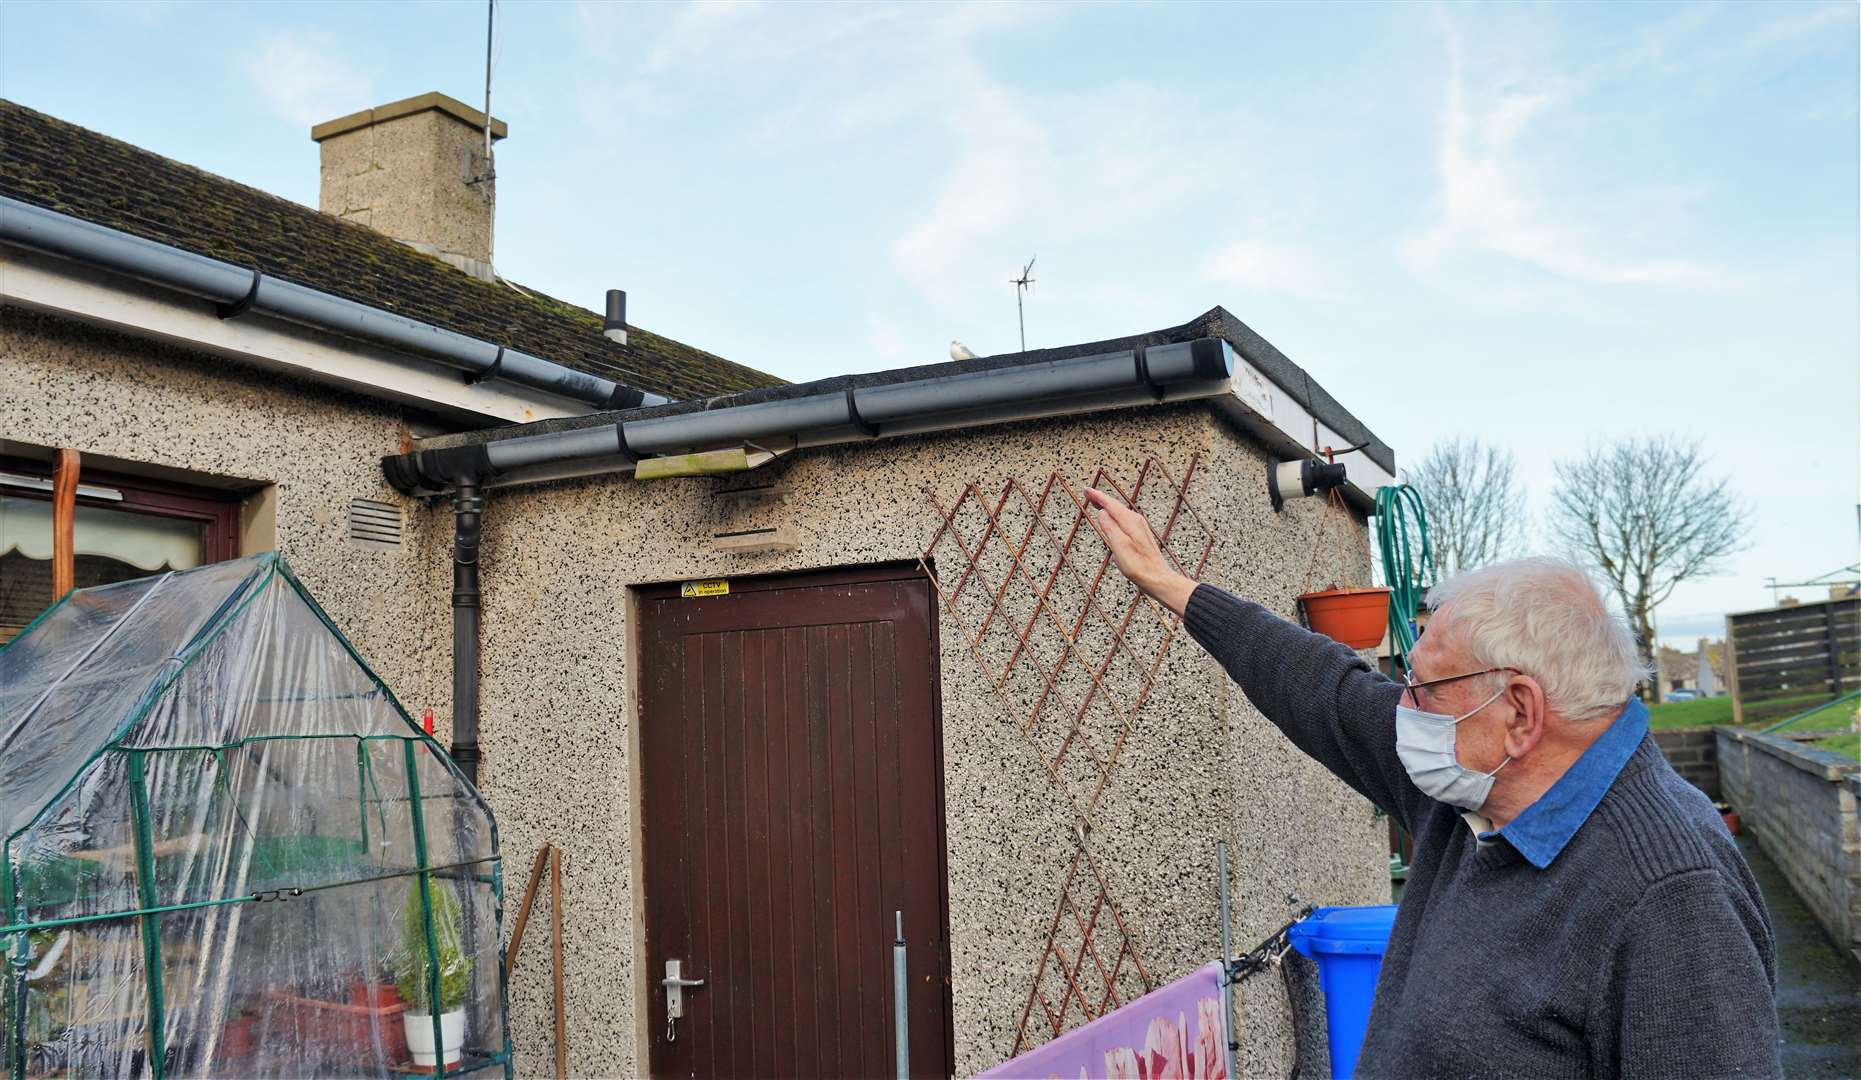 David Lightfoot points to the damaged chimney stack.